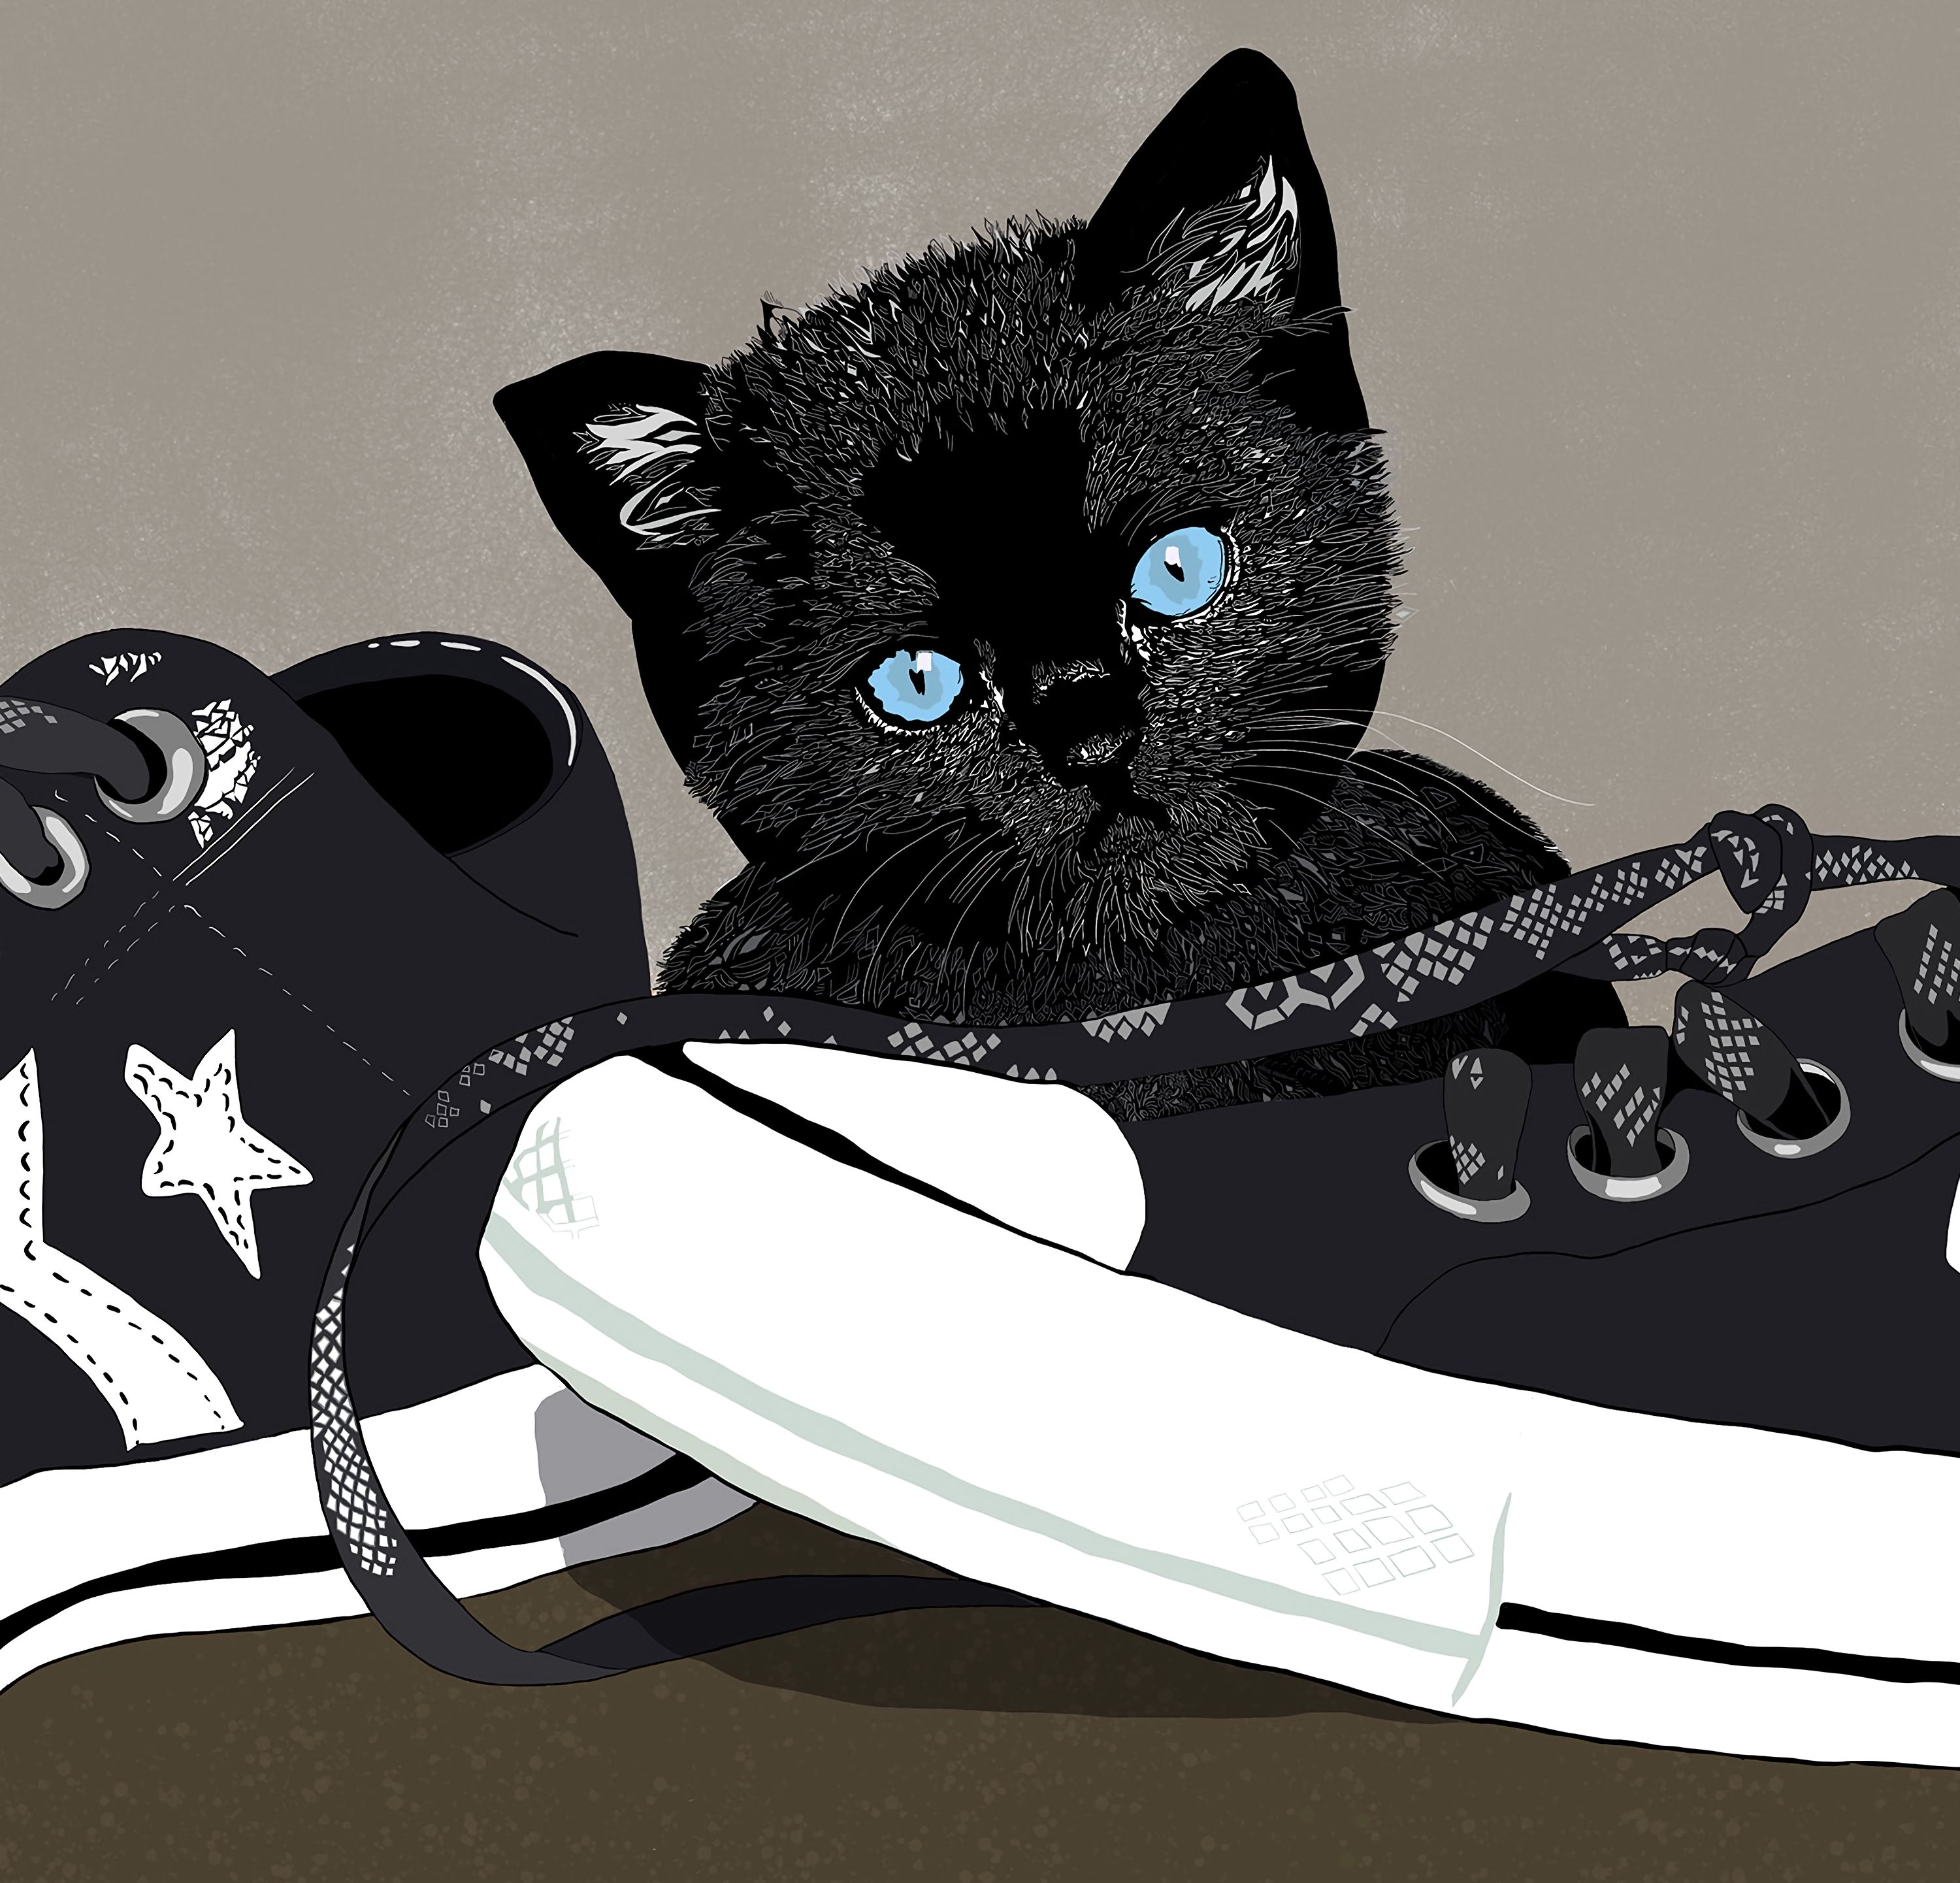 Sweetheart kitty, art, shoes, illustration Free Stock Photos